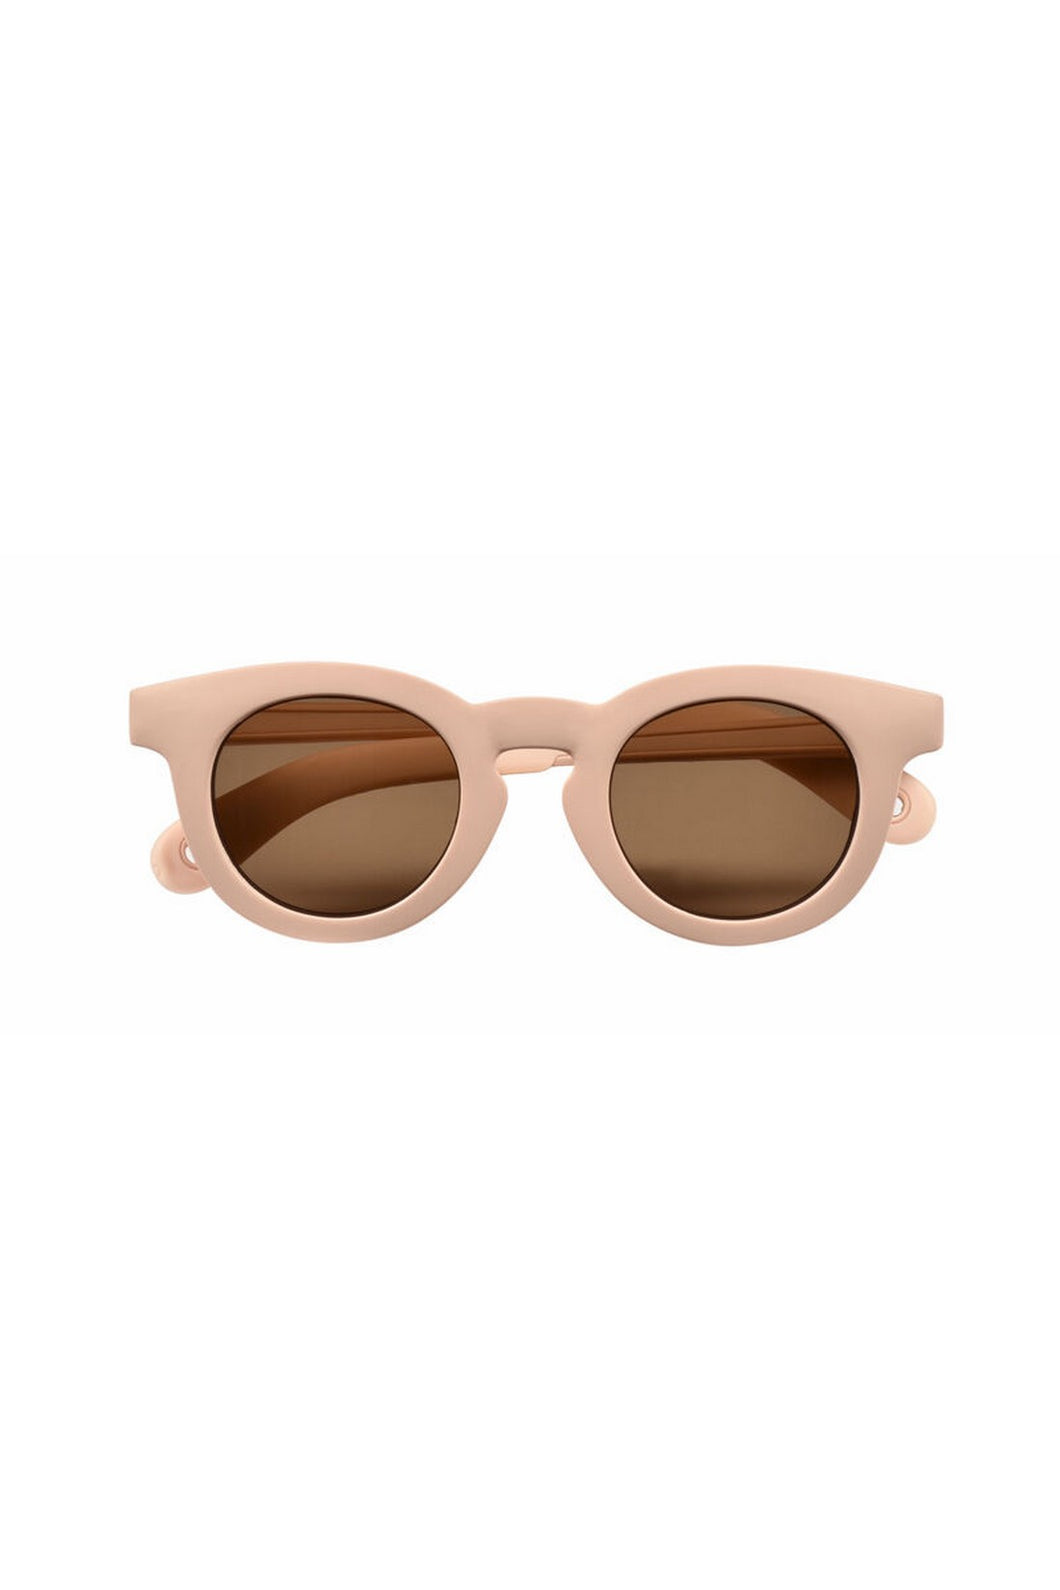 Beaba Sunglasses 9-24M - Delight Blush 1